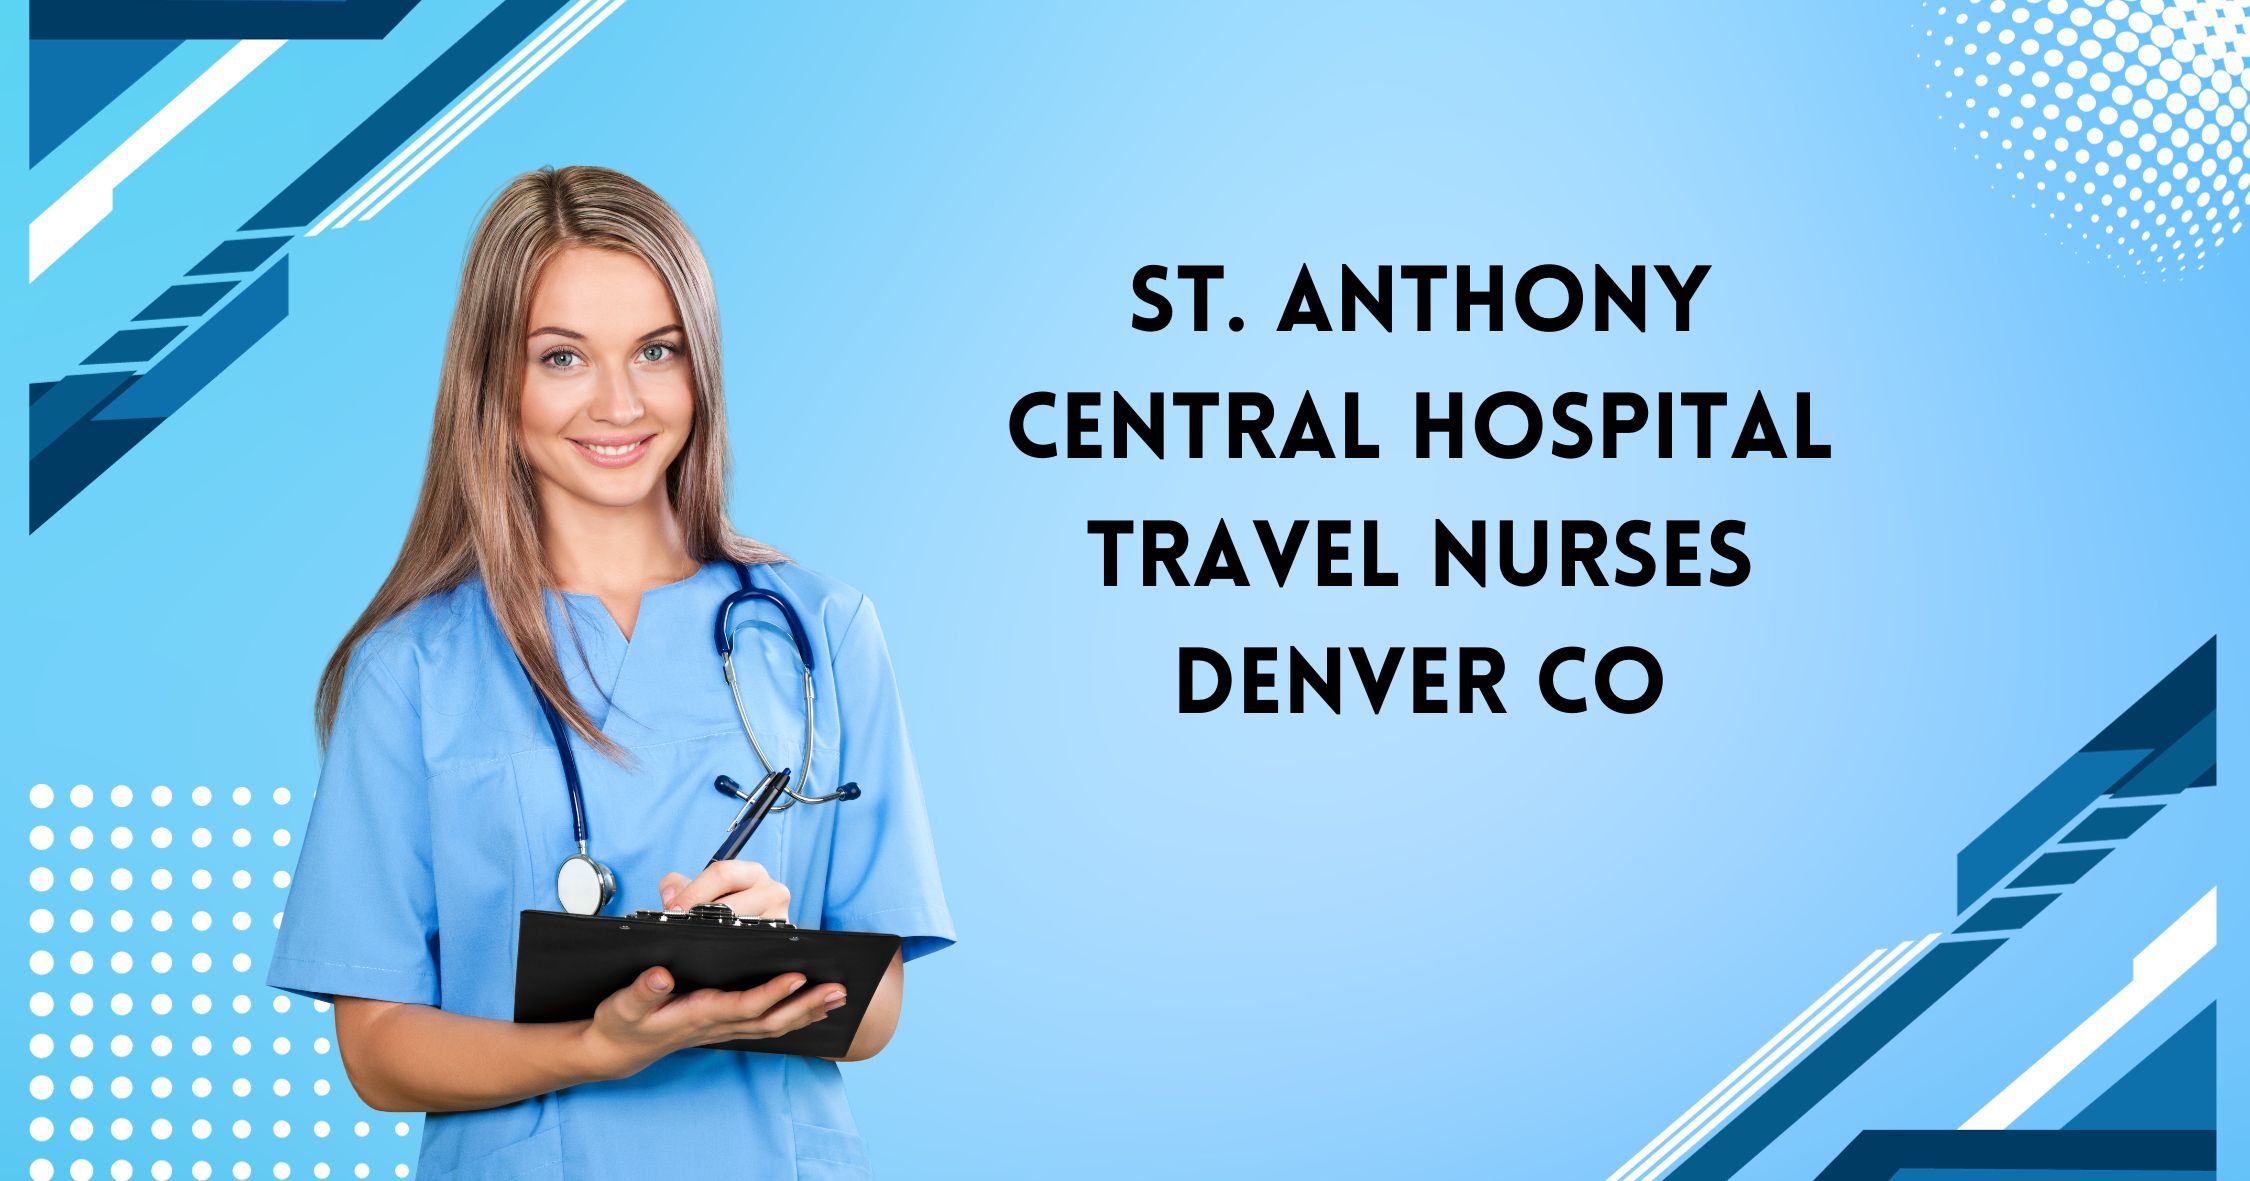 St. Anthony Central Hospital Travel Nurses Denver CO